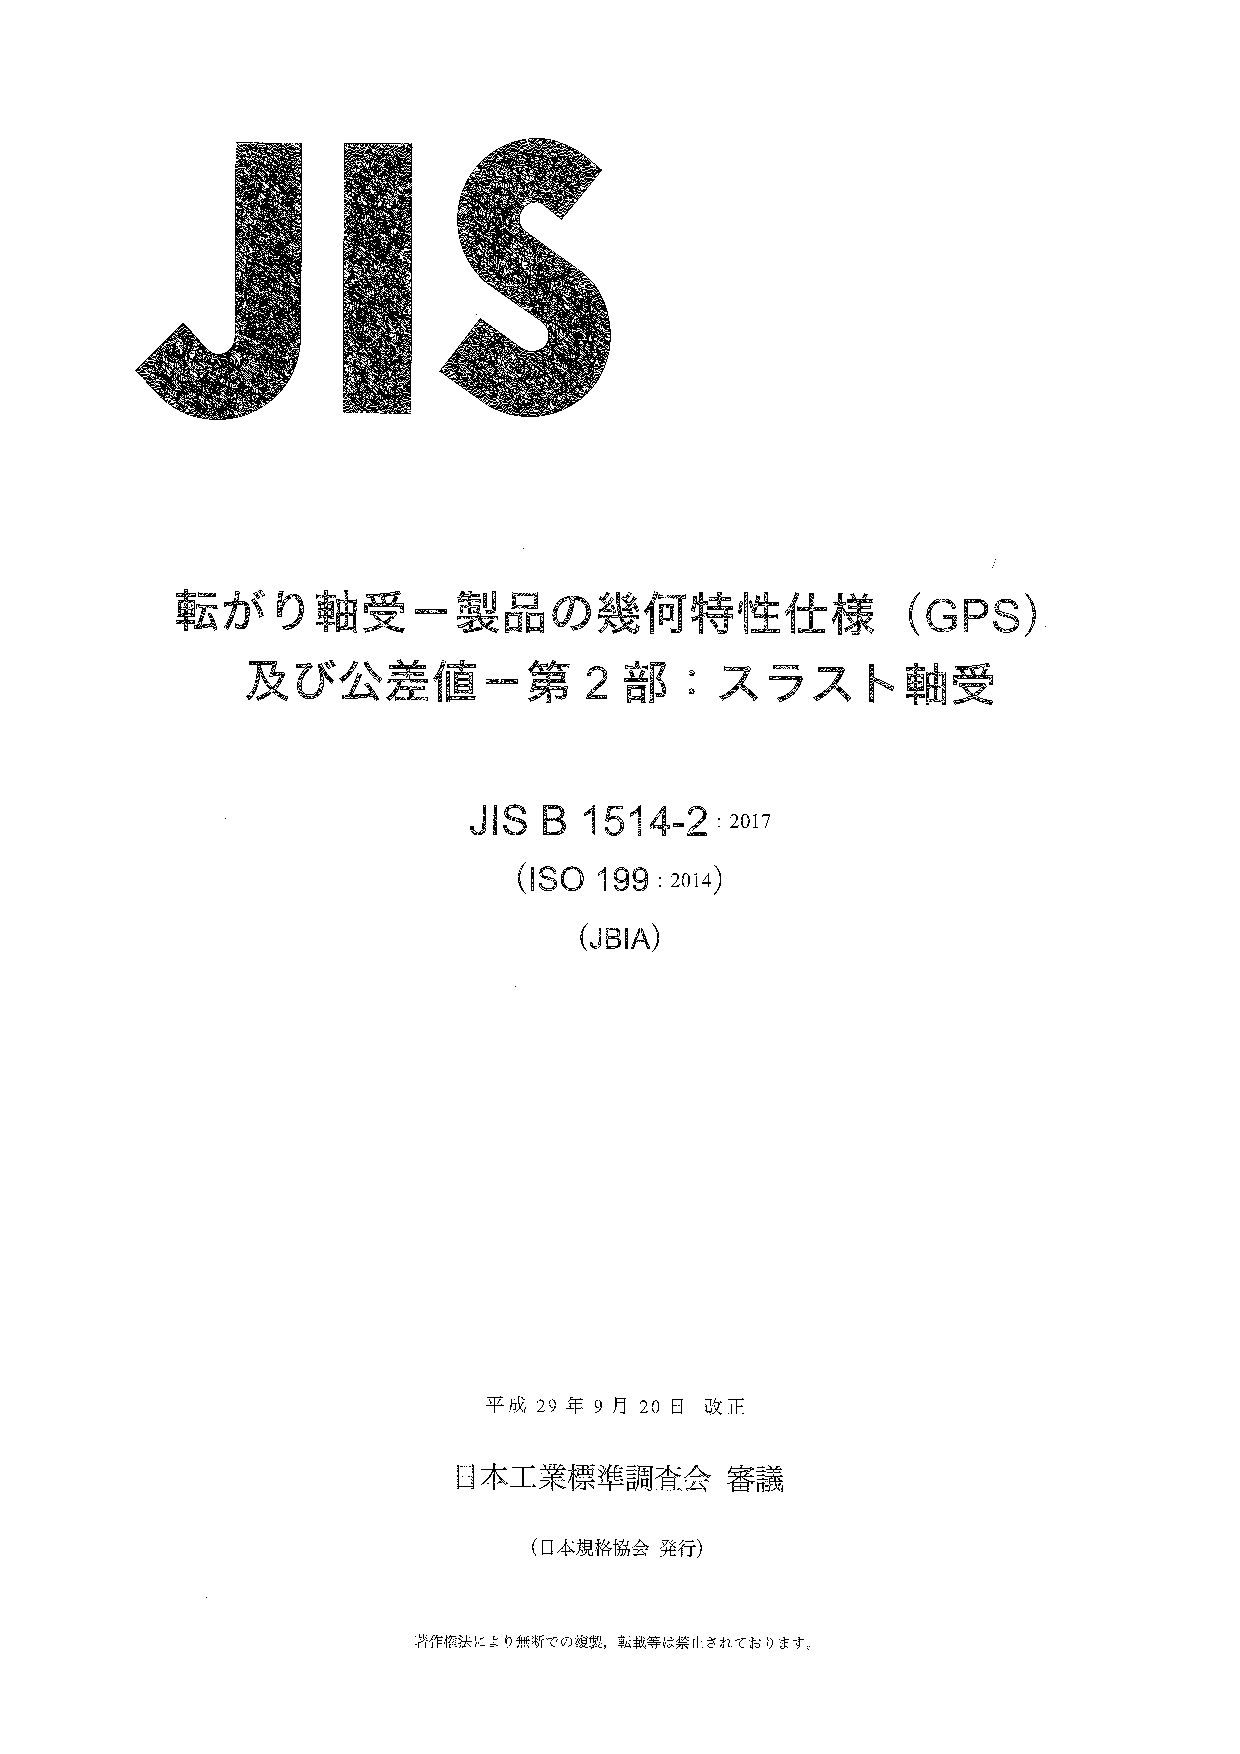 JIS B 1514-2:2017